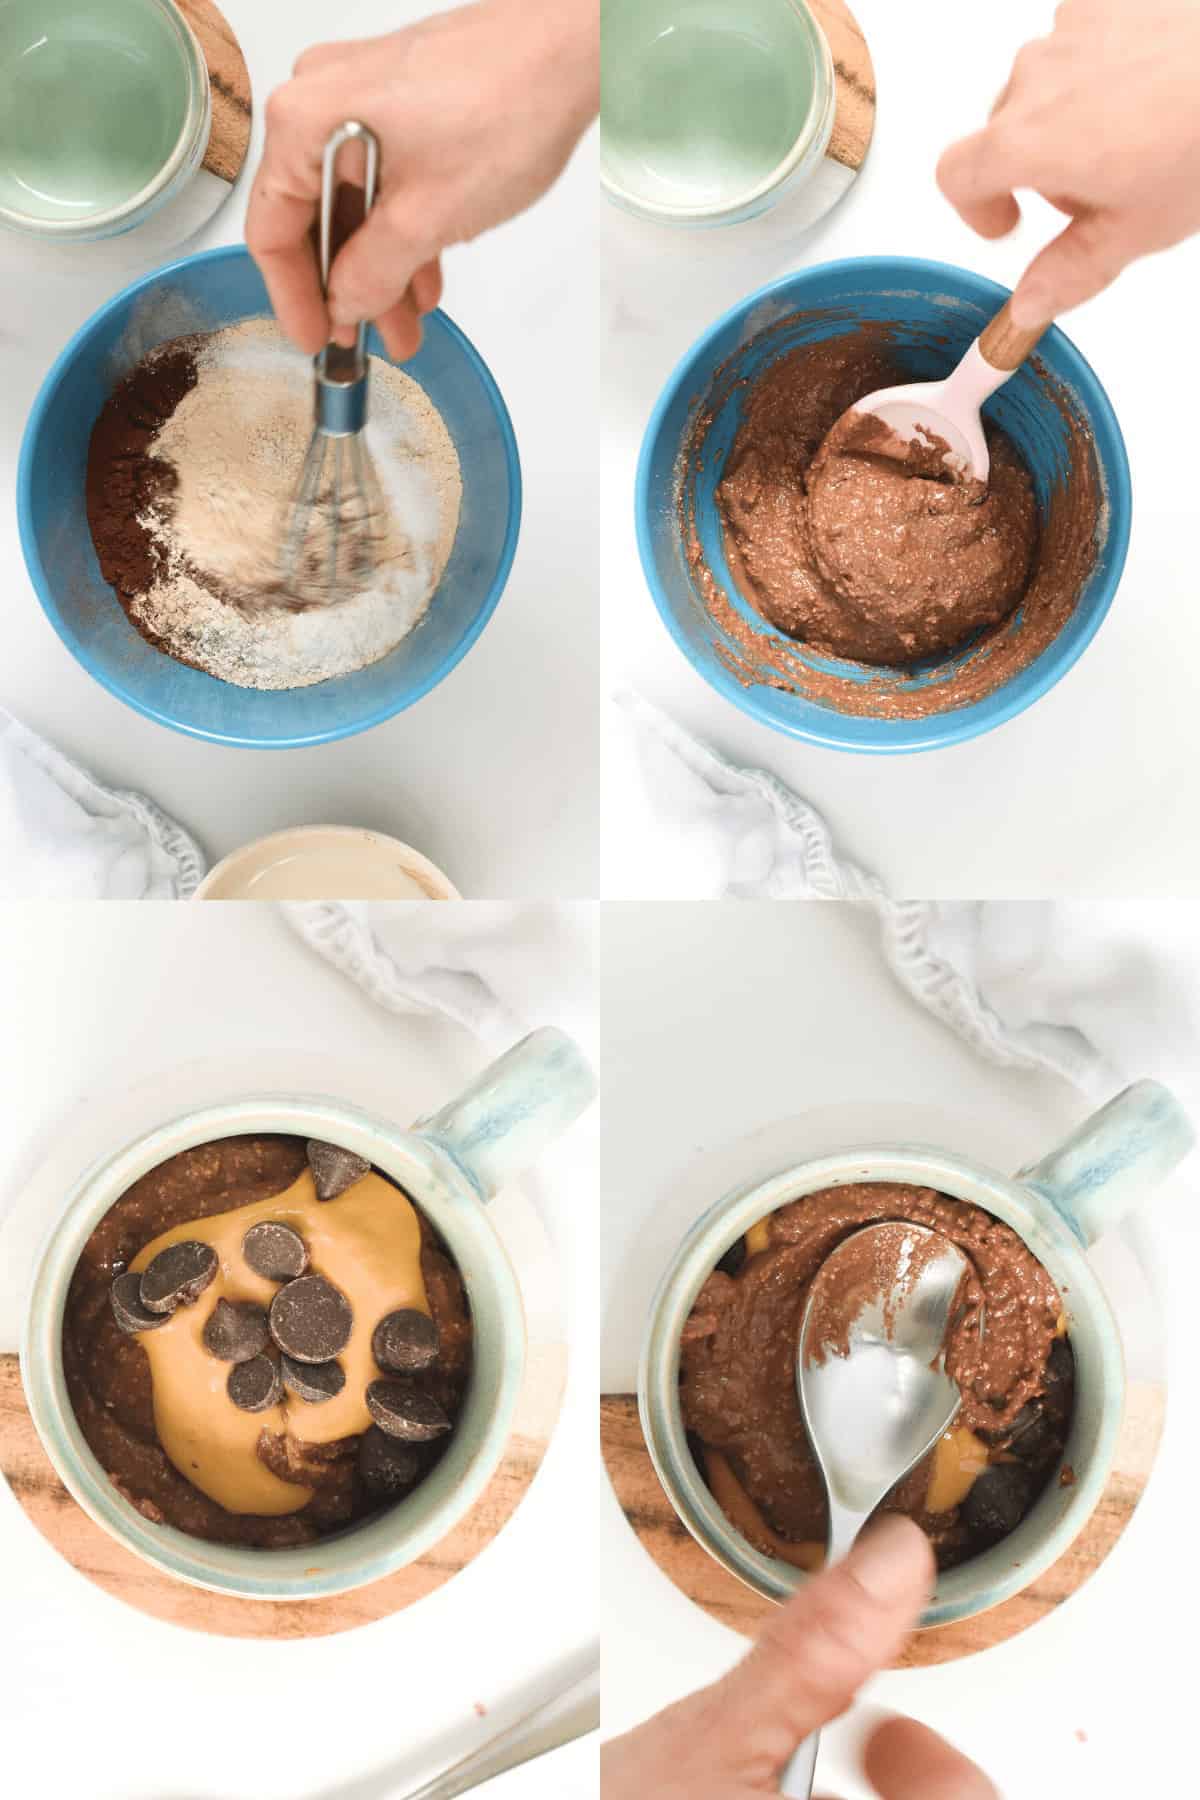 How to make Protein Powder Mug CakeHow to make Protein Powder Mug Cake